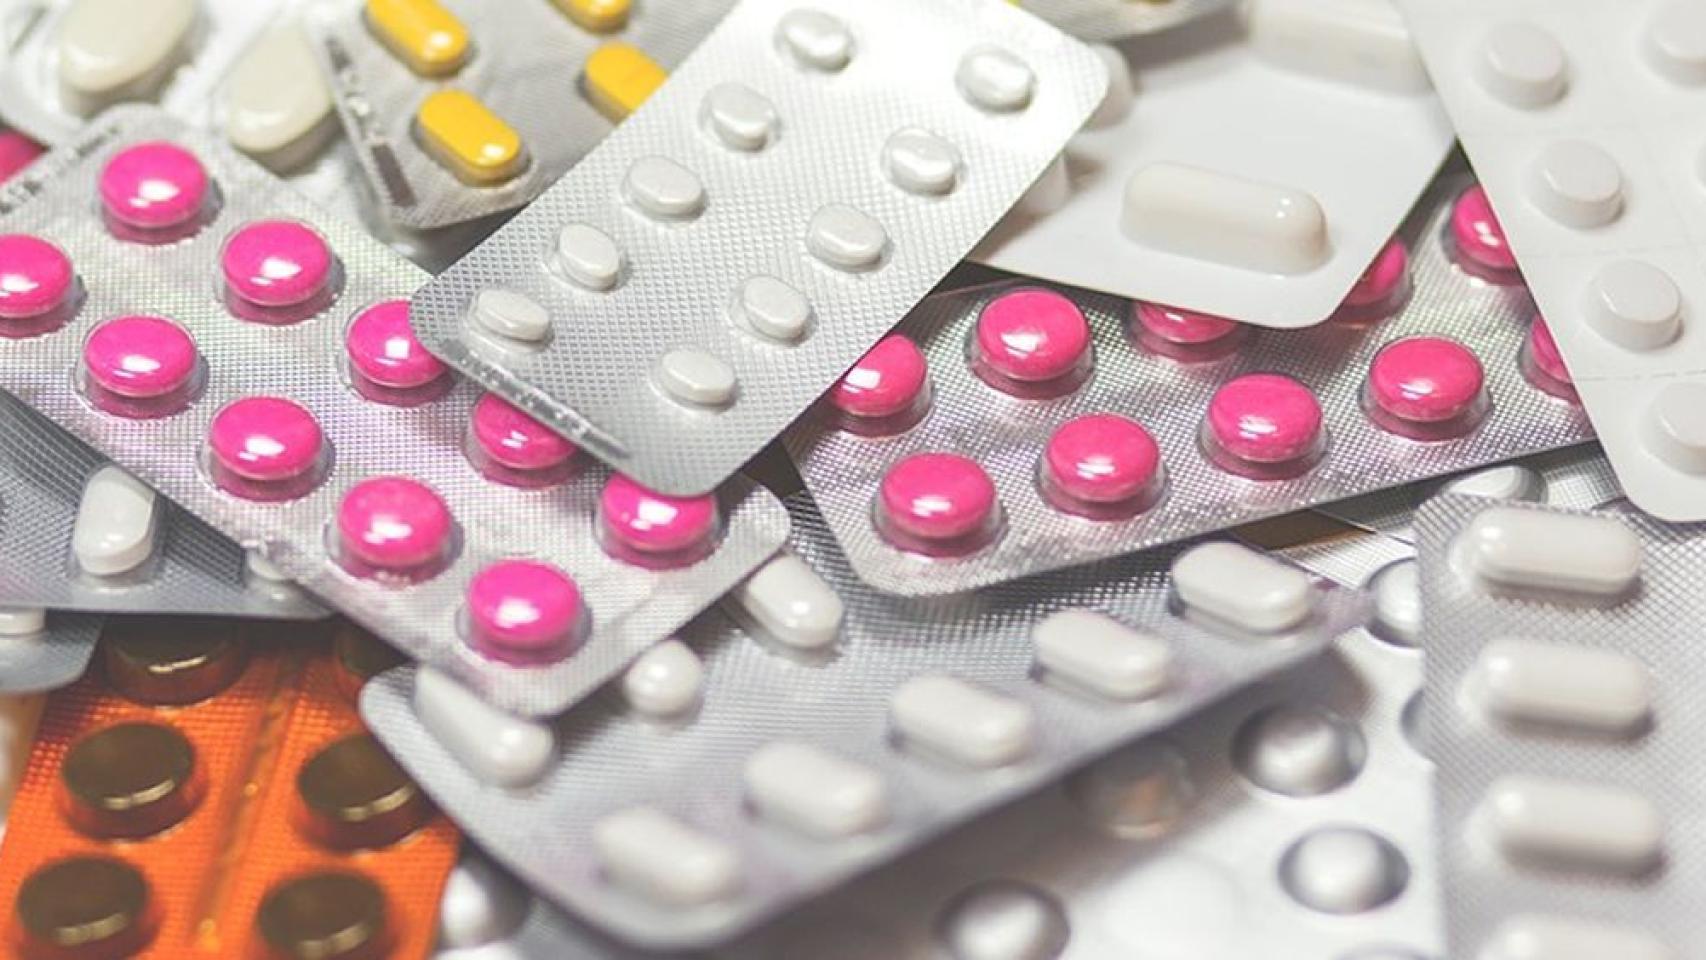 Las pastillas para adelgazar ¿Son seguras? - Noticias Grupo Recoletas